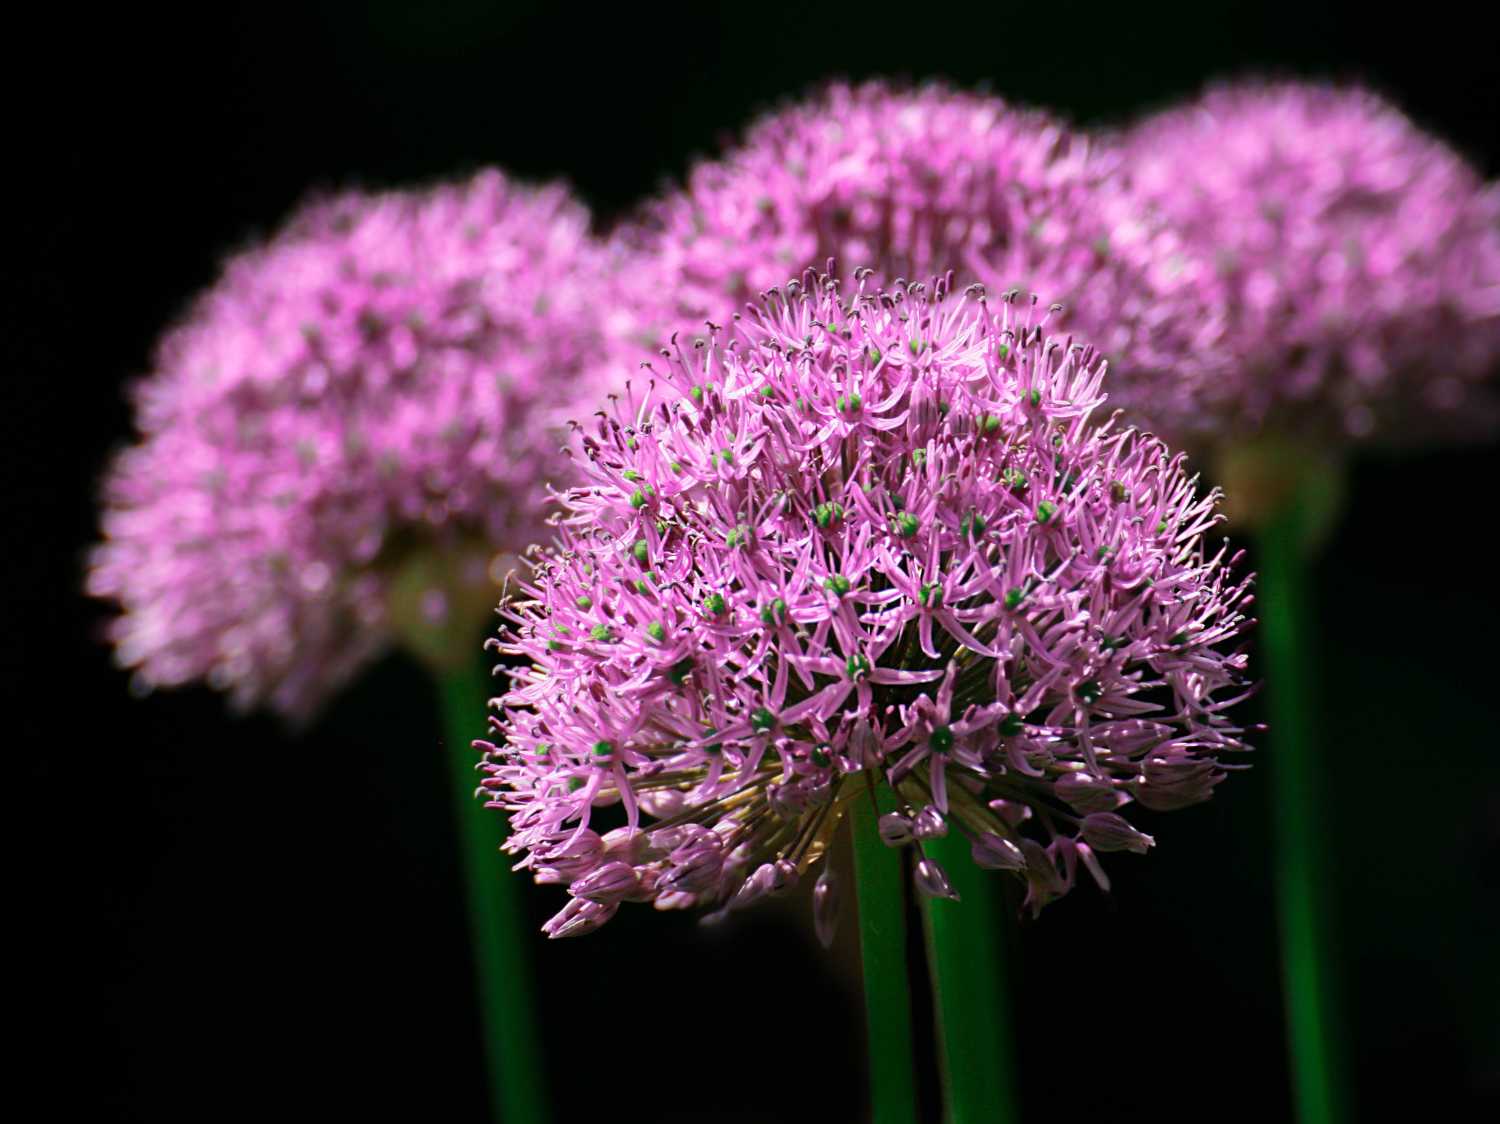 Ornamental onion, a beautiful garden flower